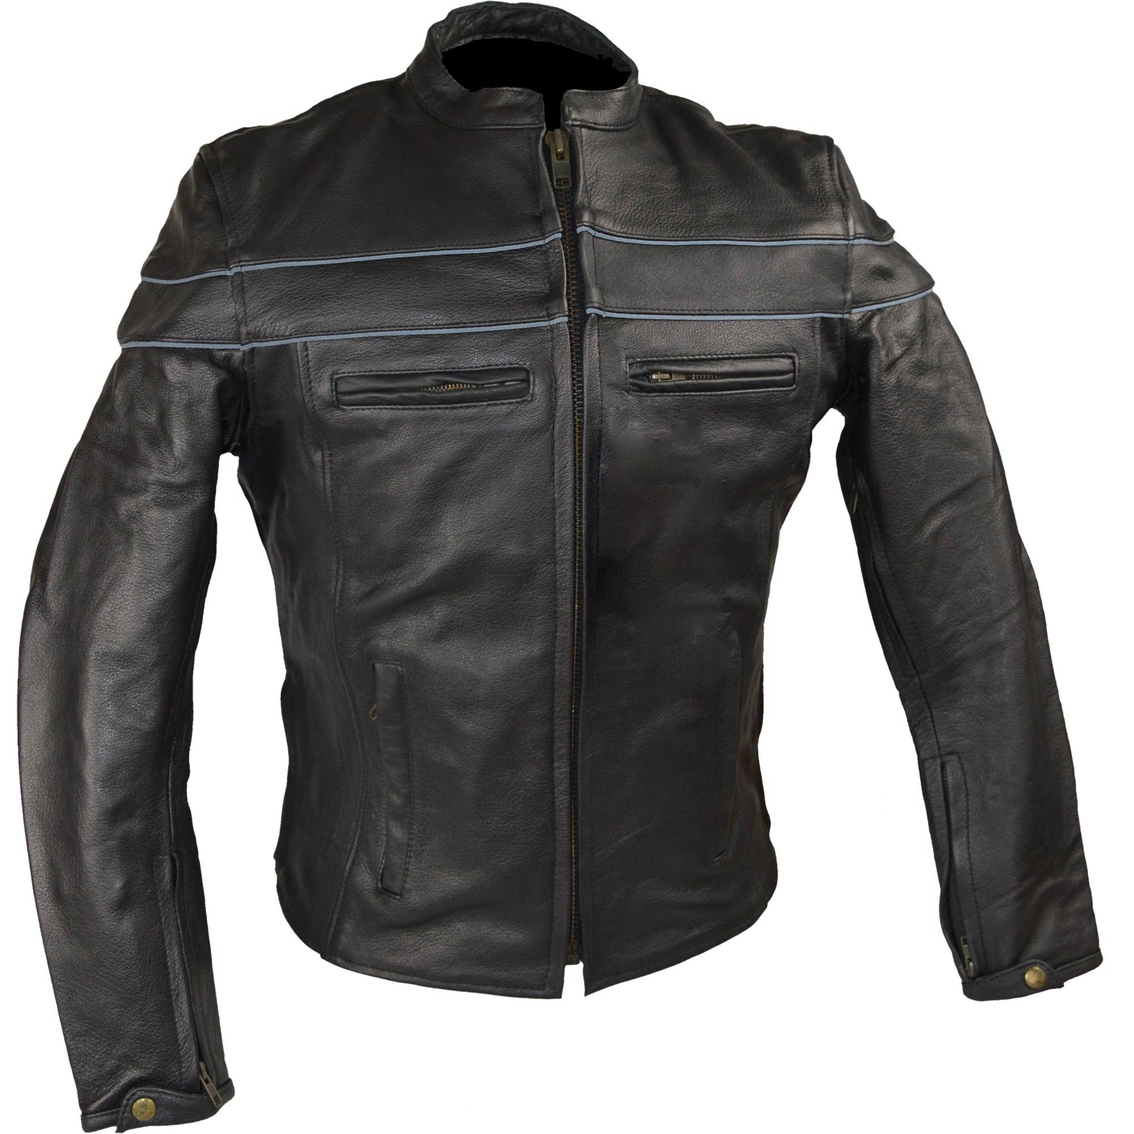 Vance Leathers Premium Leather Racer Jacket | Clothing | Patio, Garden ...